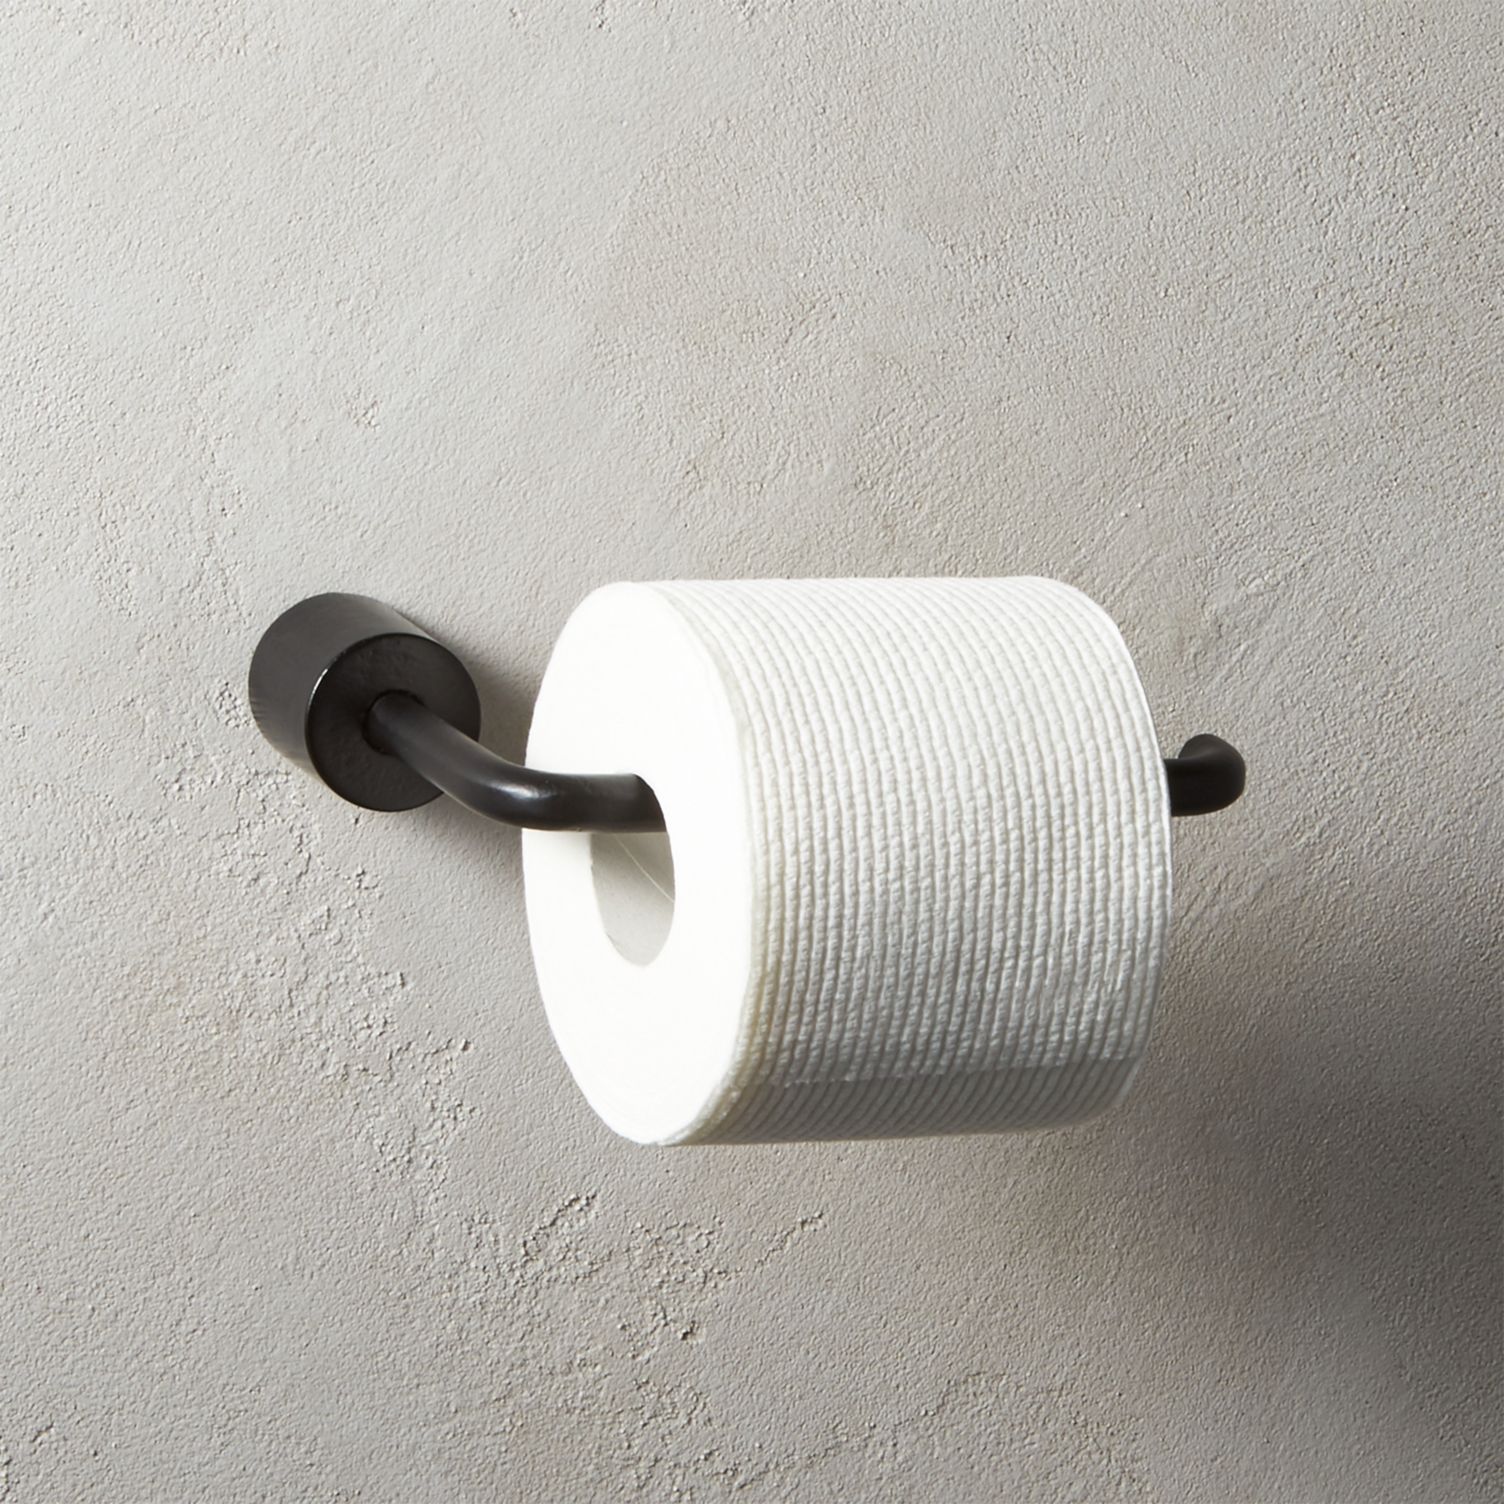 Black aluminum toilet paper holder